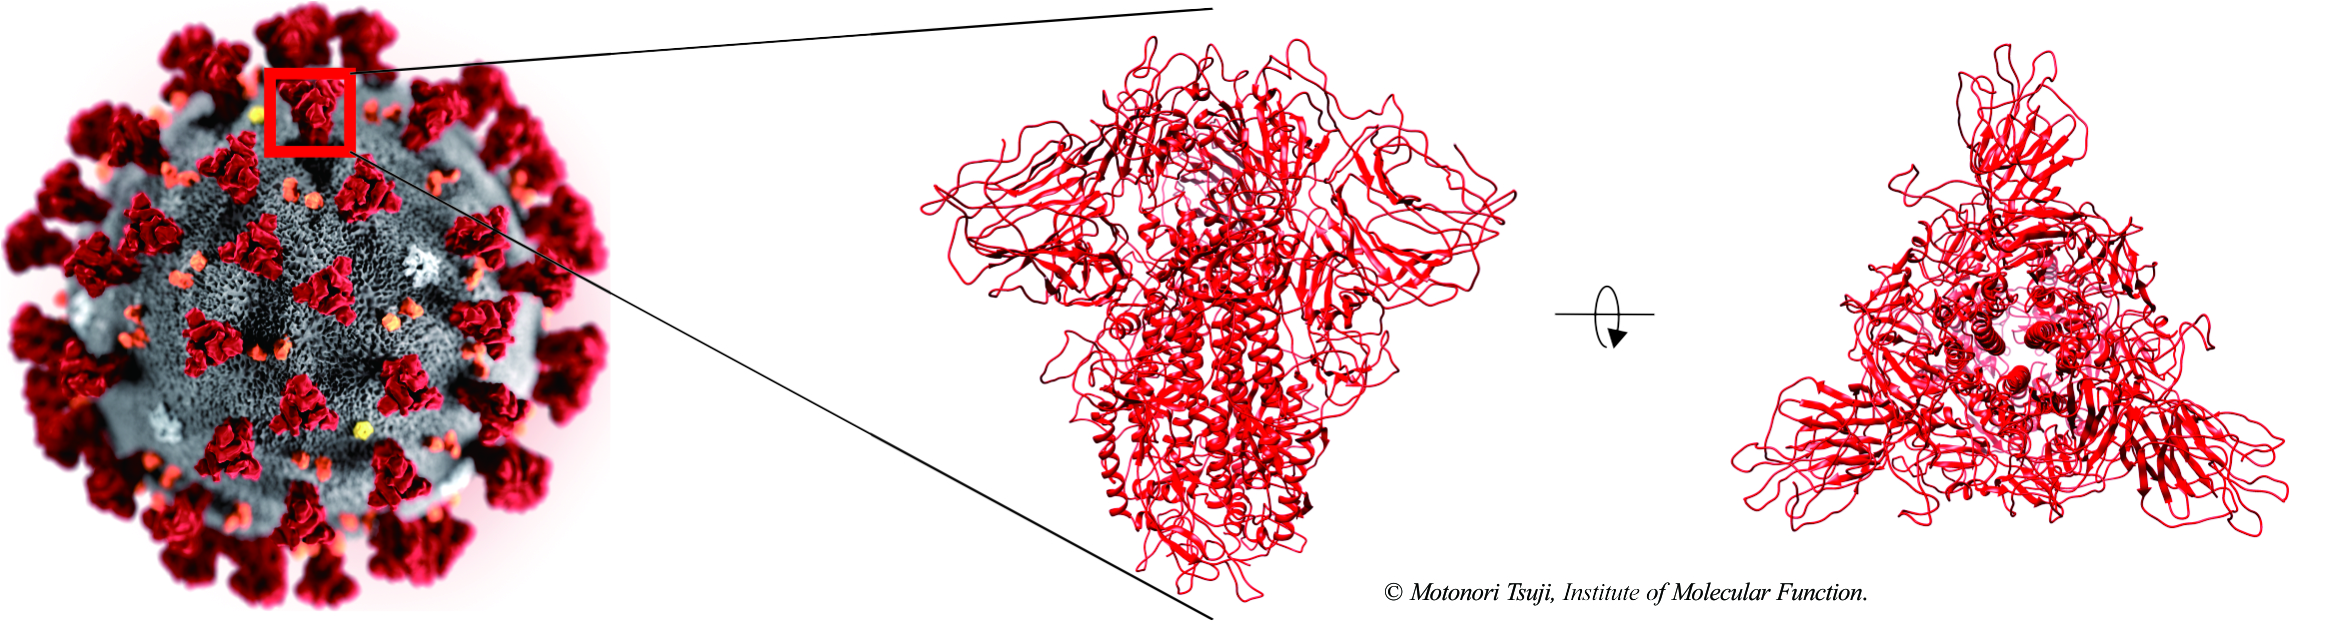 Antibody design for 2019-nCoV spike glycoprotein